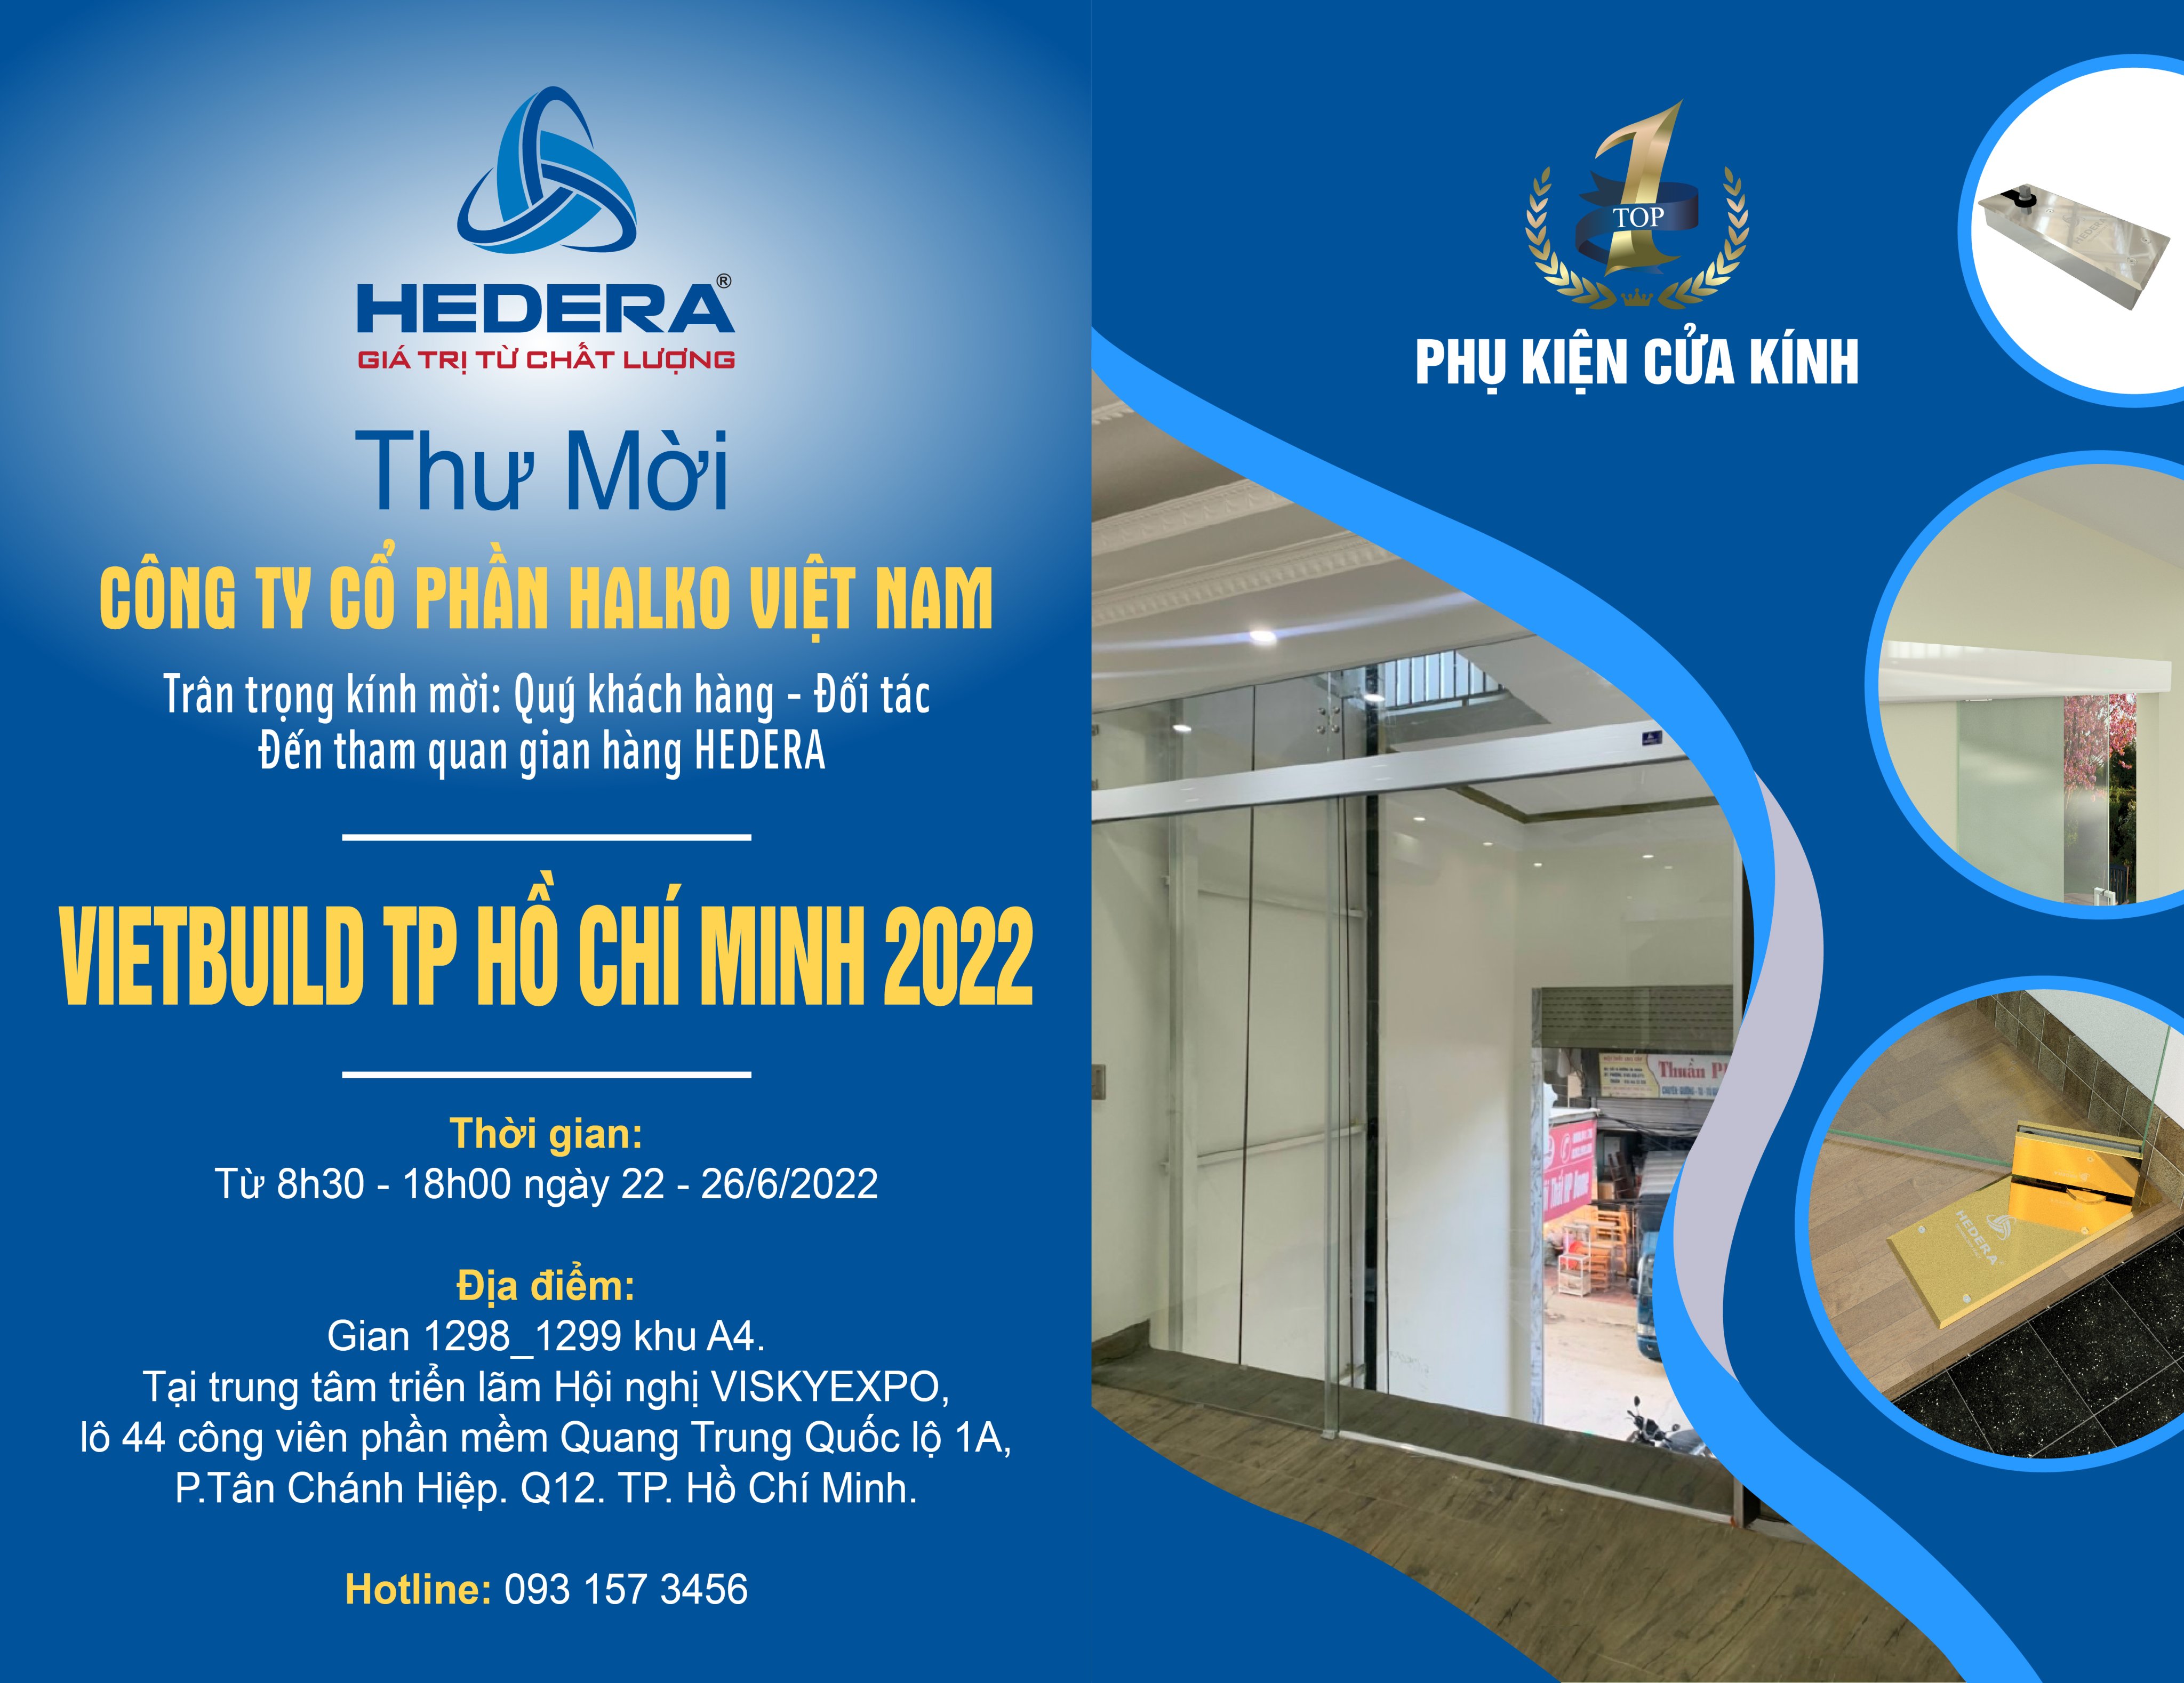 TRIỂN LÃM QUỐC TẾ VIETBUILD HCM 2022 - HEDERA